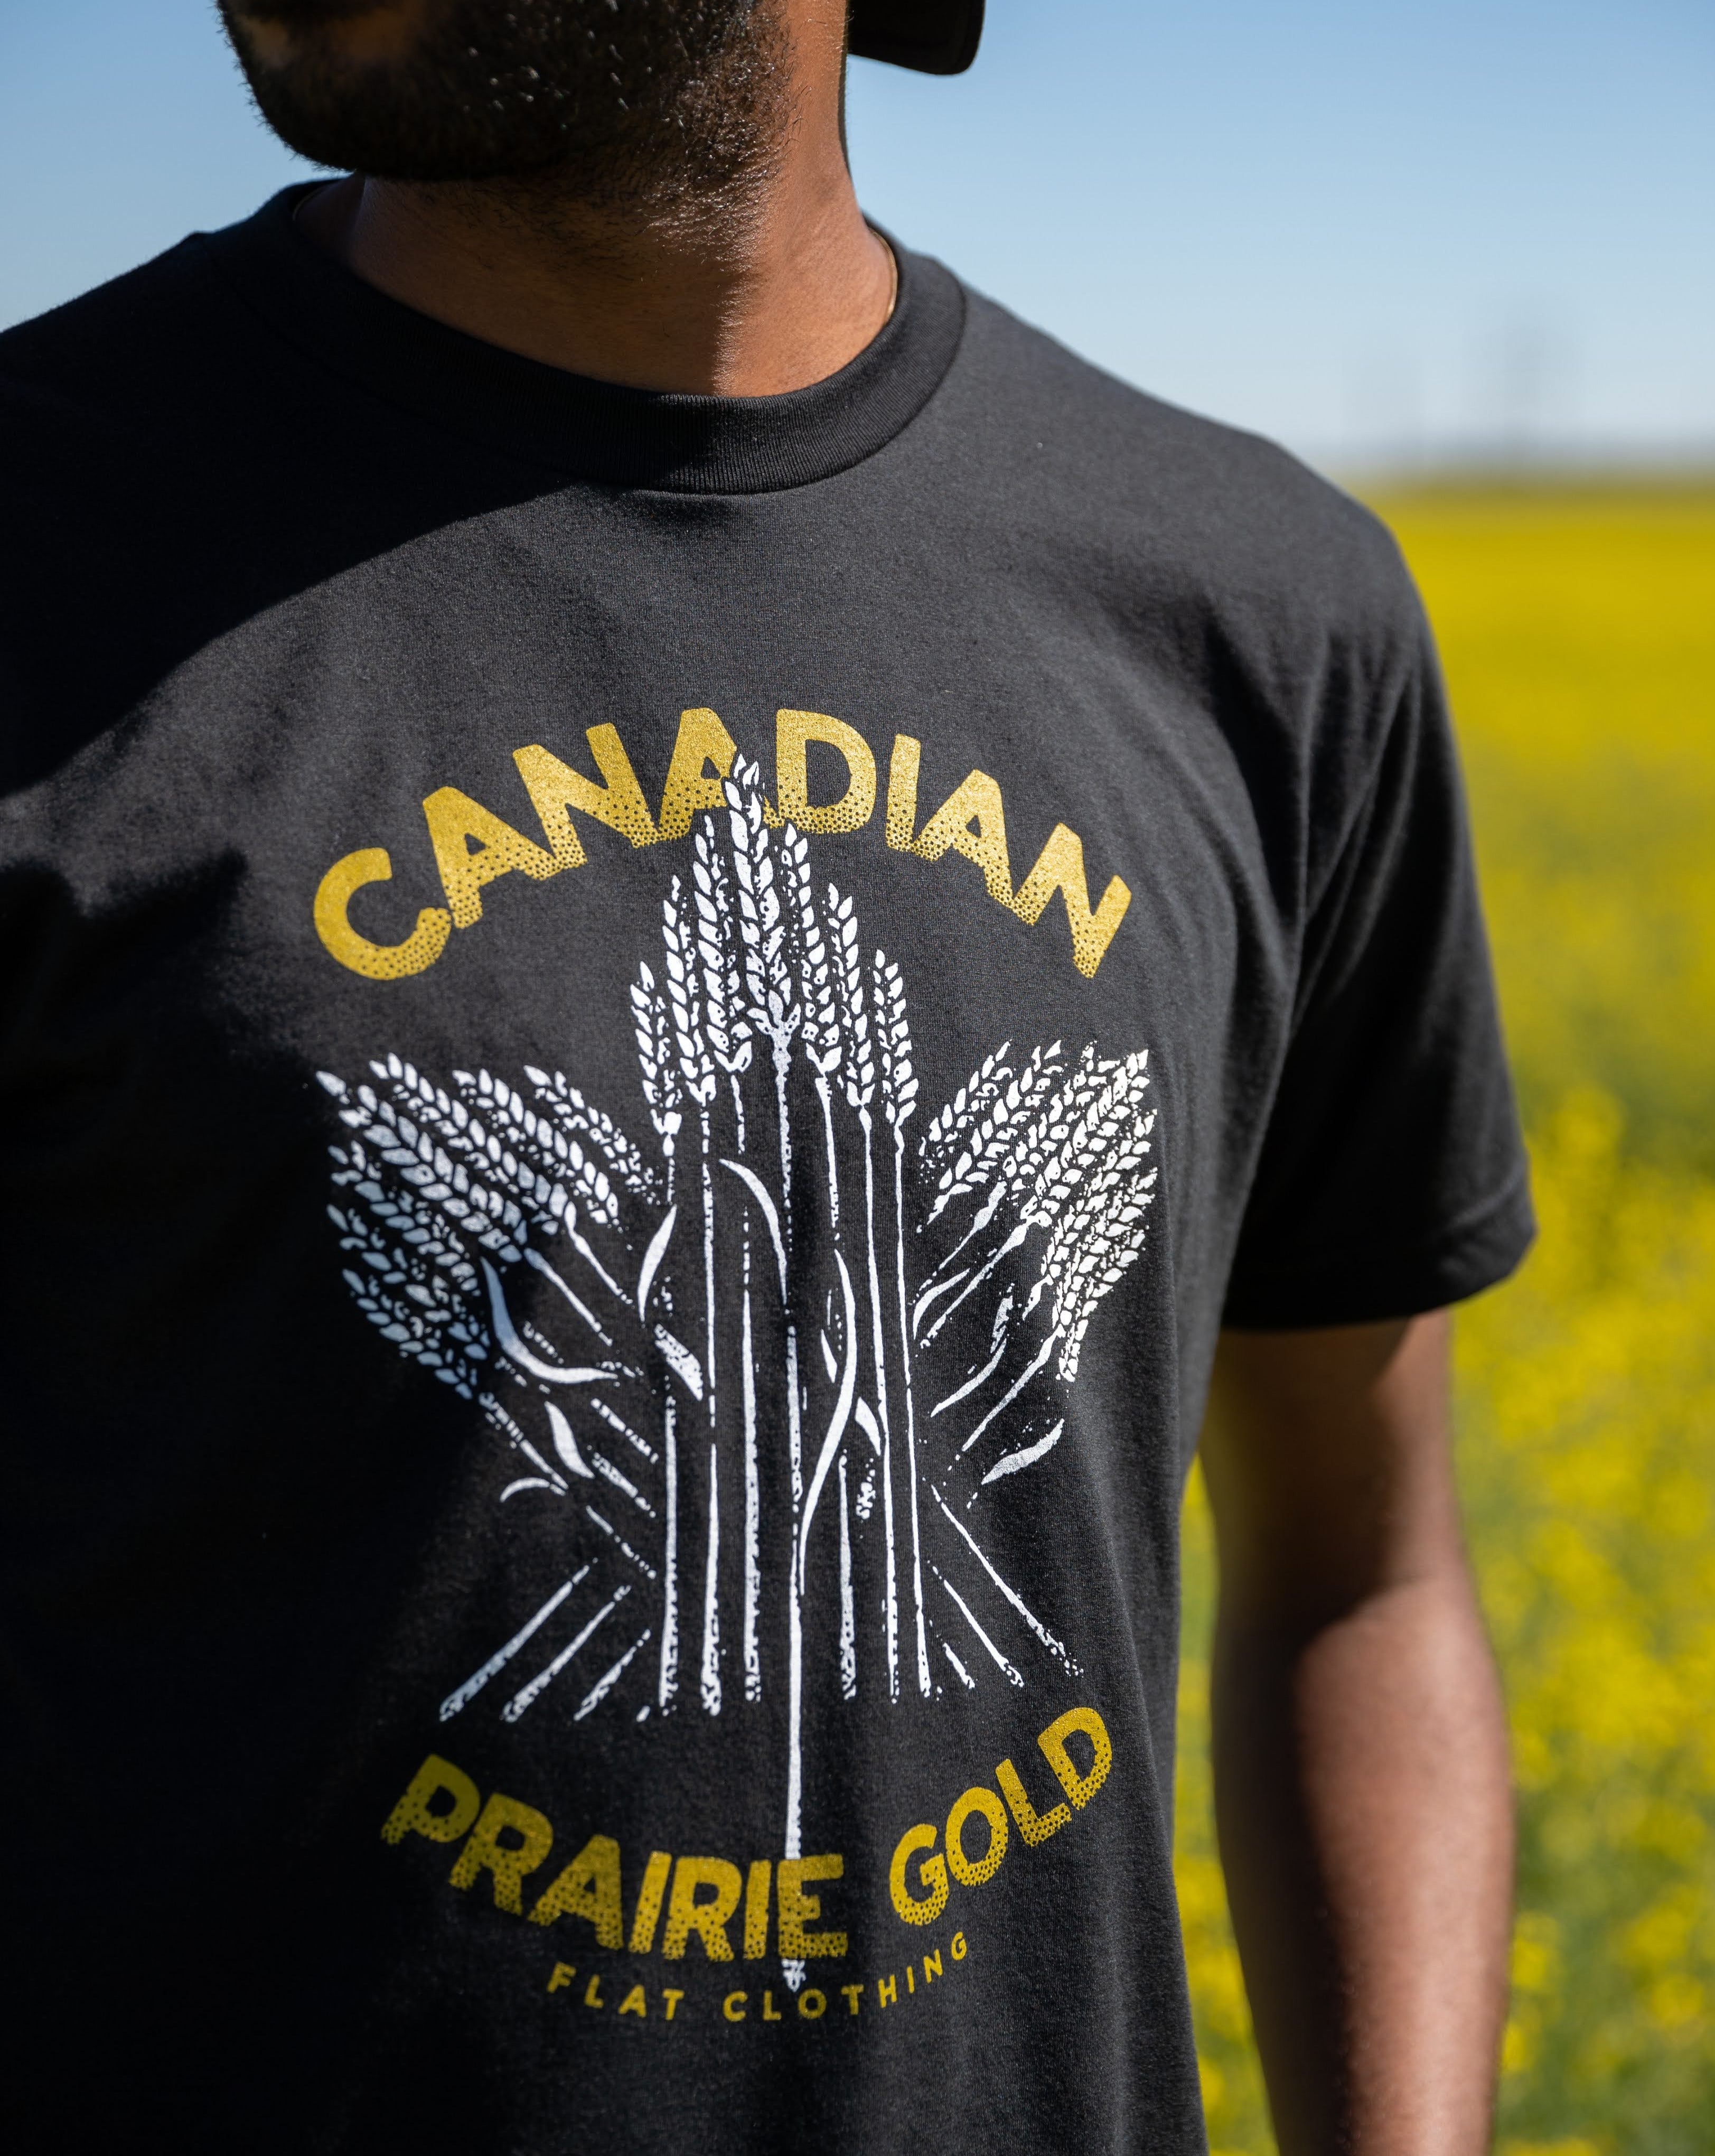 FLAT // Canadian Prairie Gold / Unisex